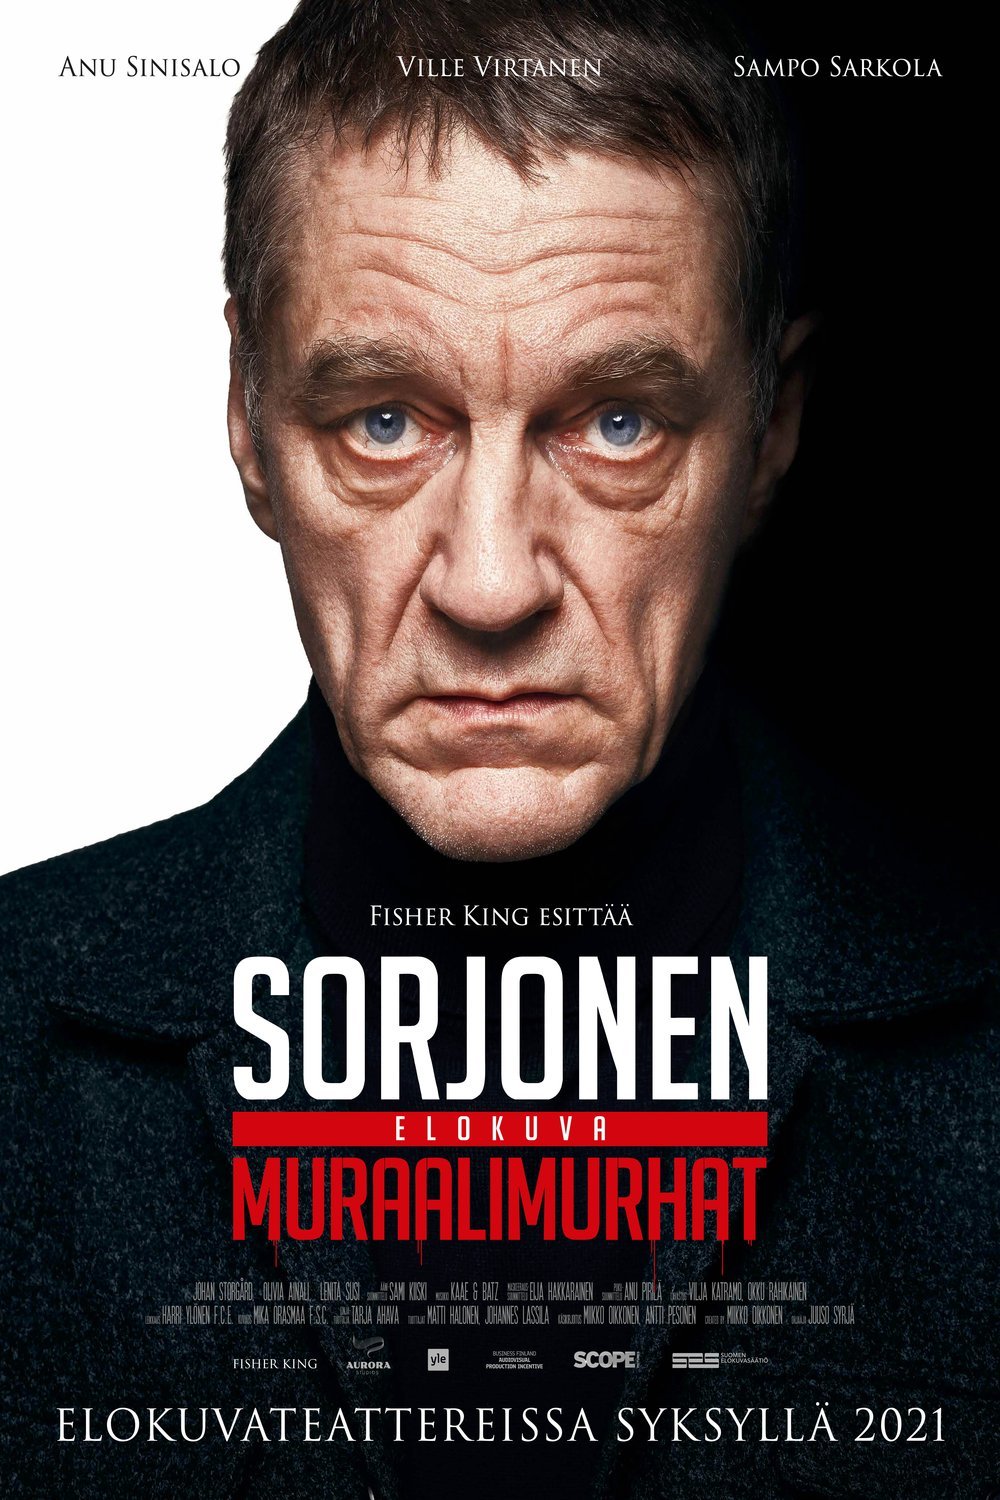 L'affiche originale du film Sorjonen: Muraalimurhat en finlandais